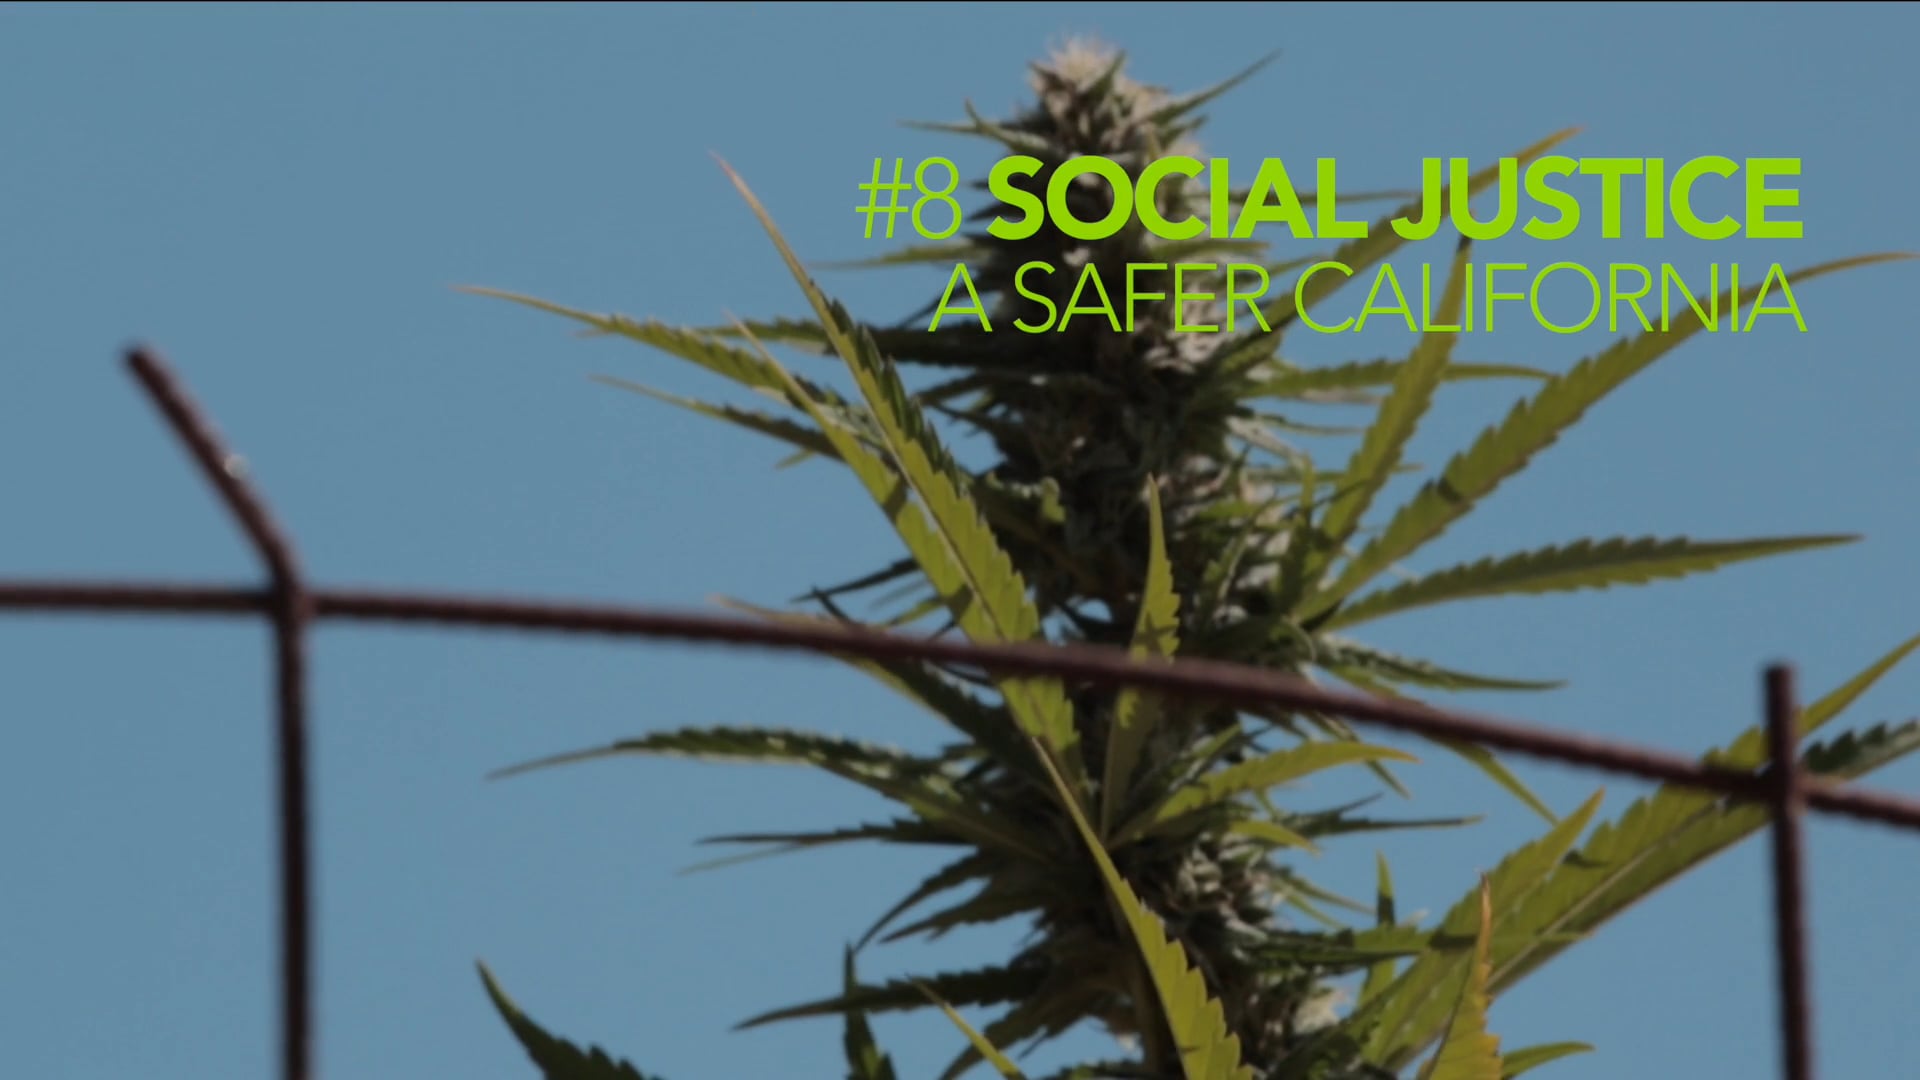 CCP #8 Social Justice - A Safer California